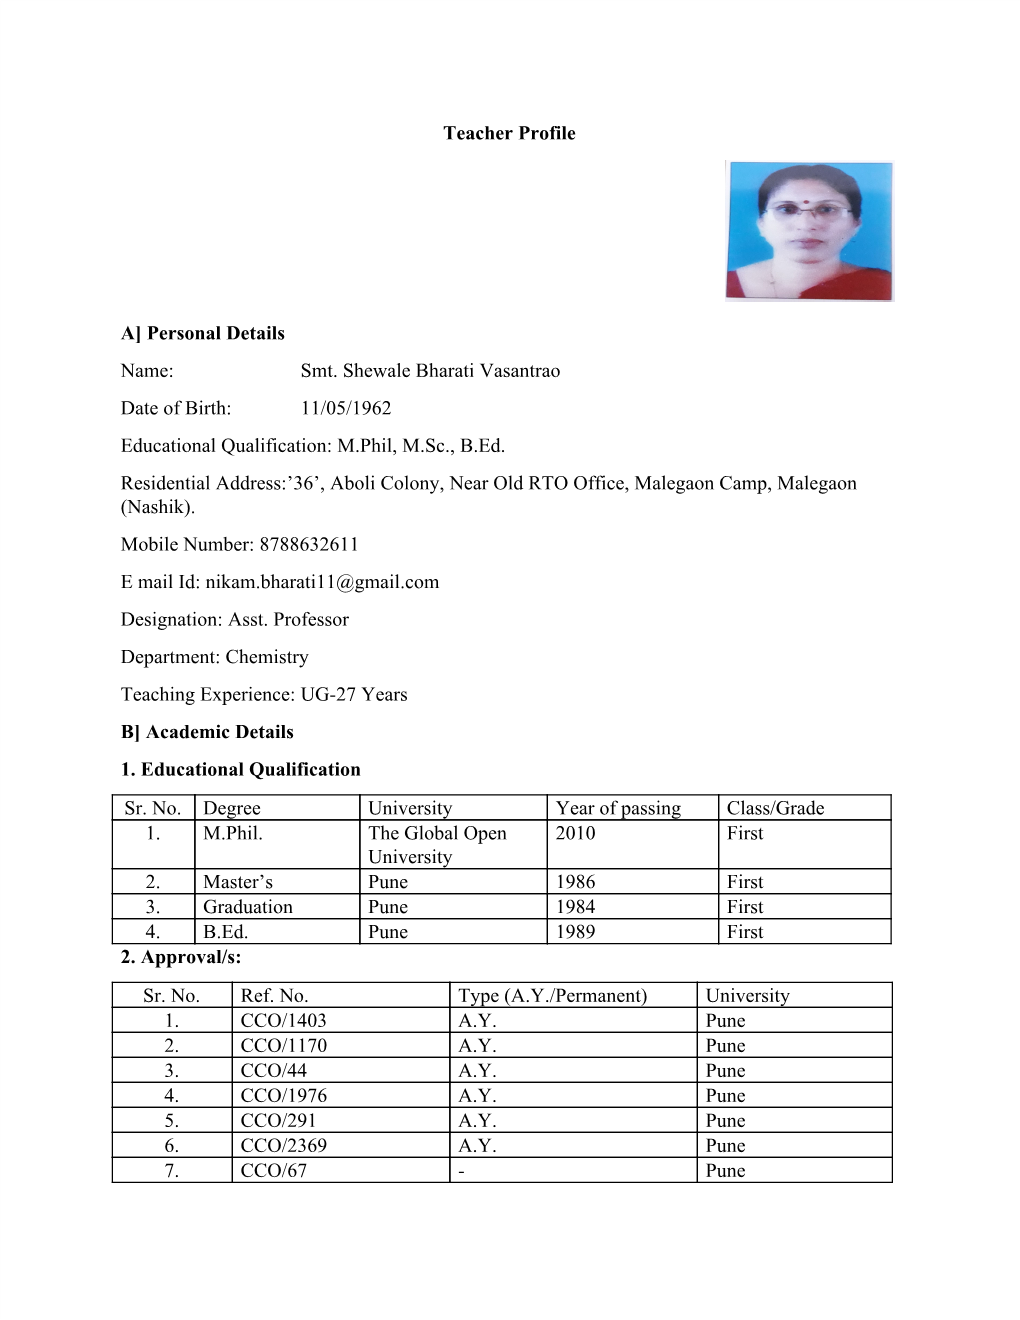 Teacher Profile A] Personal Details Name: Smt. Shewale Bharati